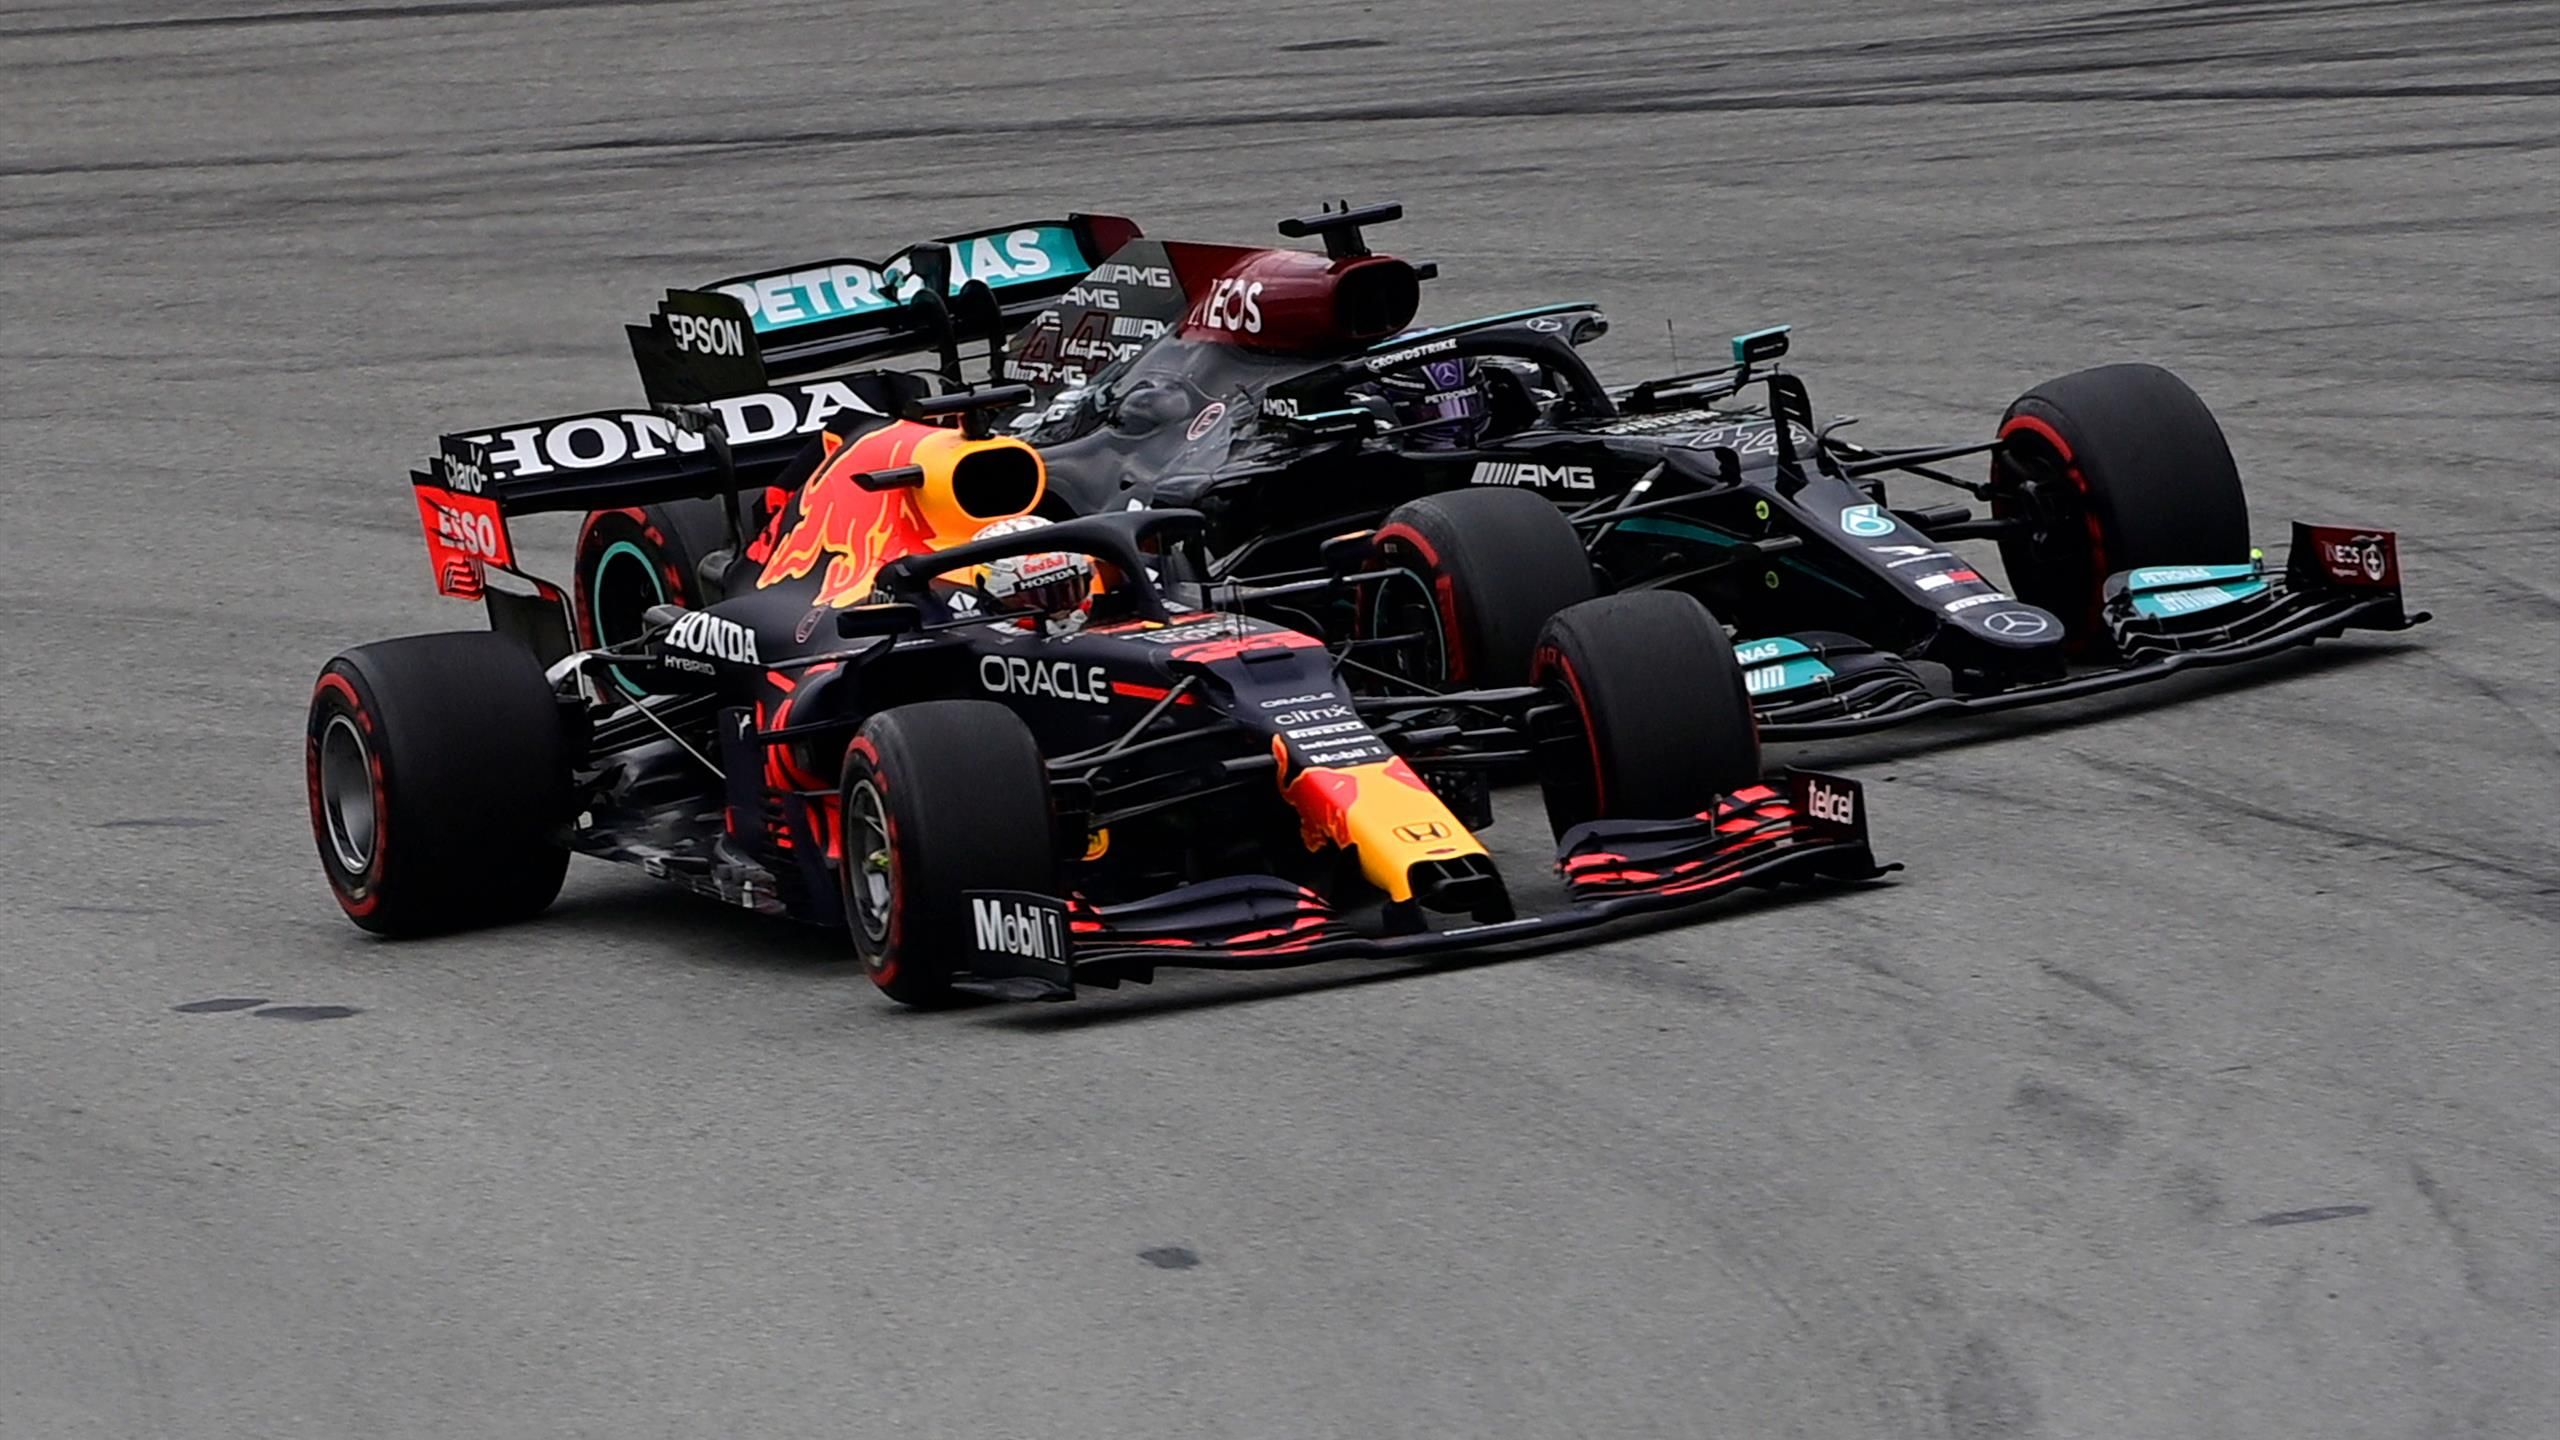 Formula 1 Spanish Grand Prix - Lewis Hamilton wins third race of 2021 season - As it happened